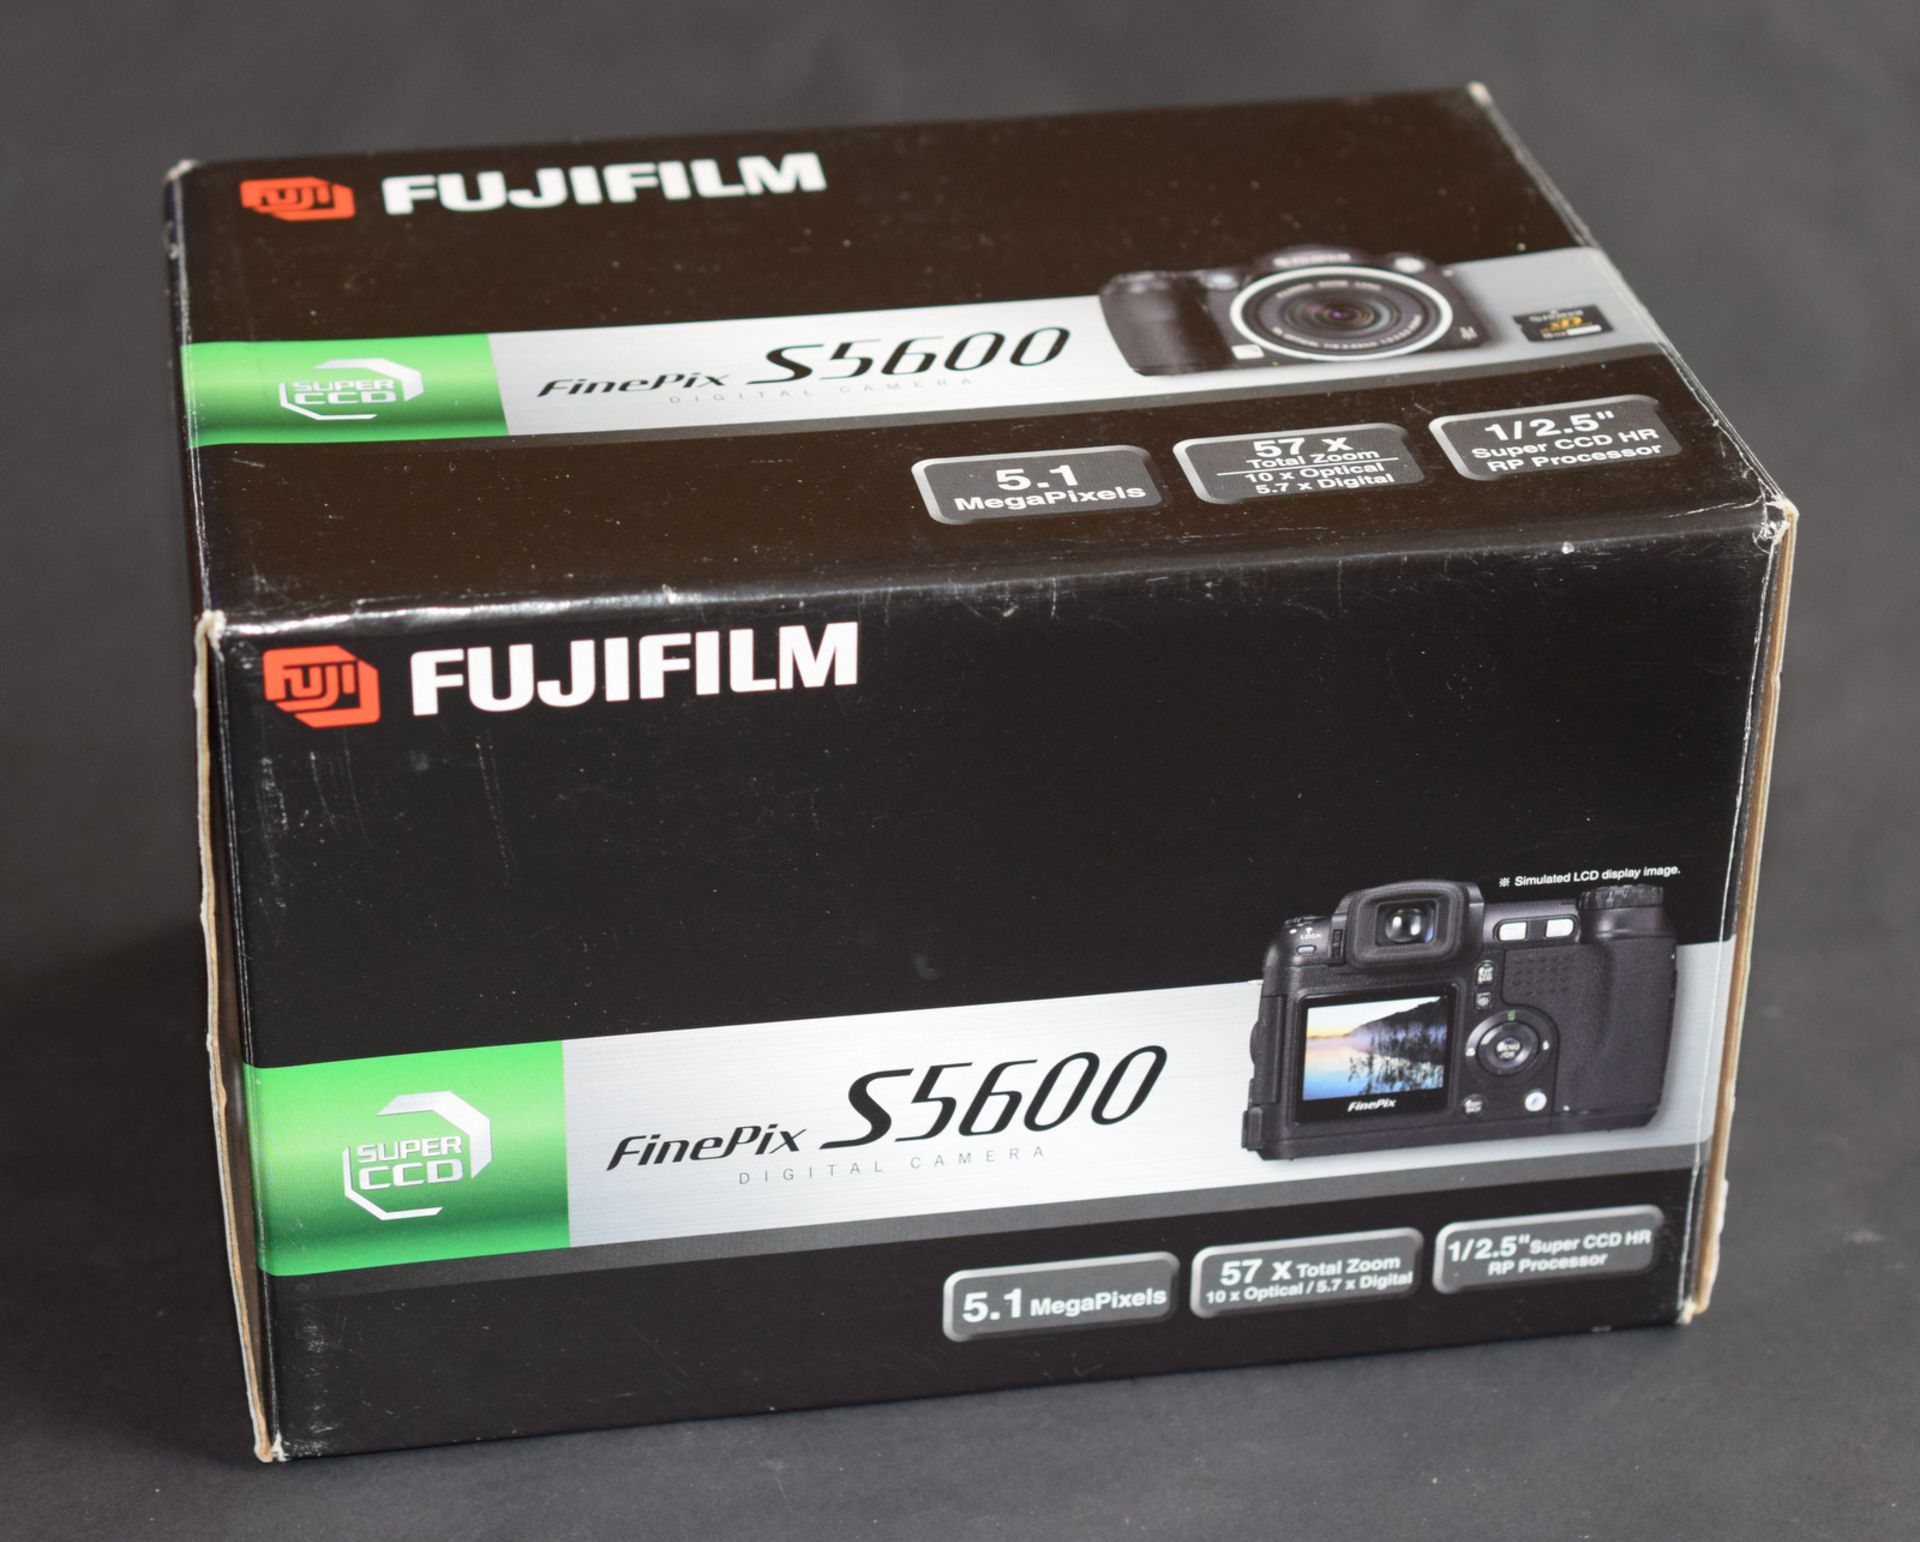 Fujifilm Finepix S5600 Digital Camera - Image 5 of 5